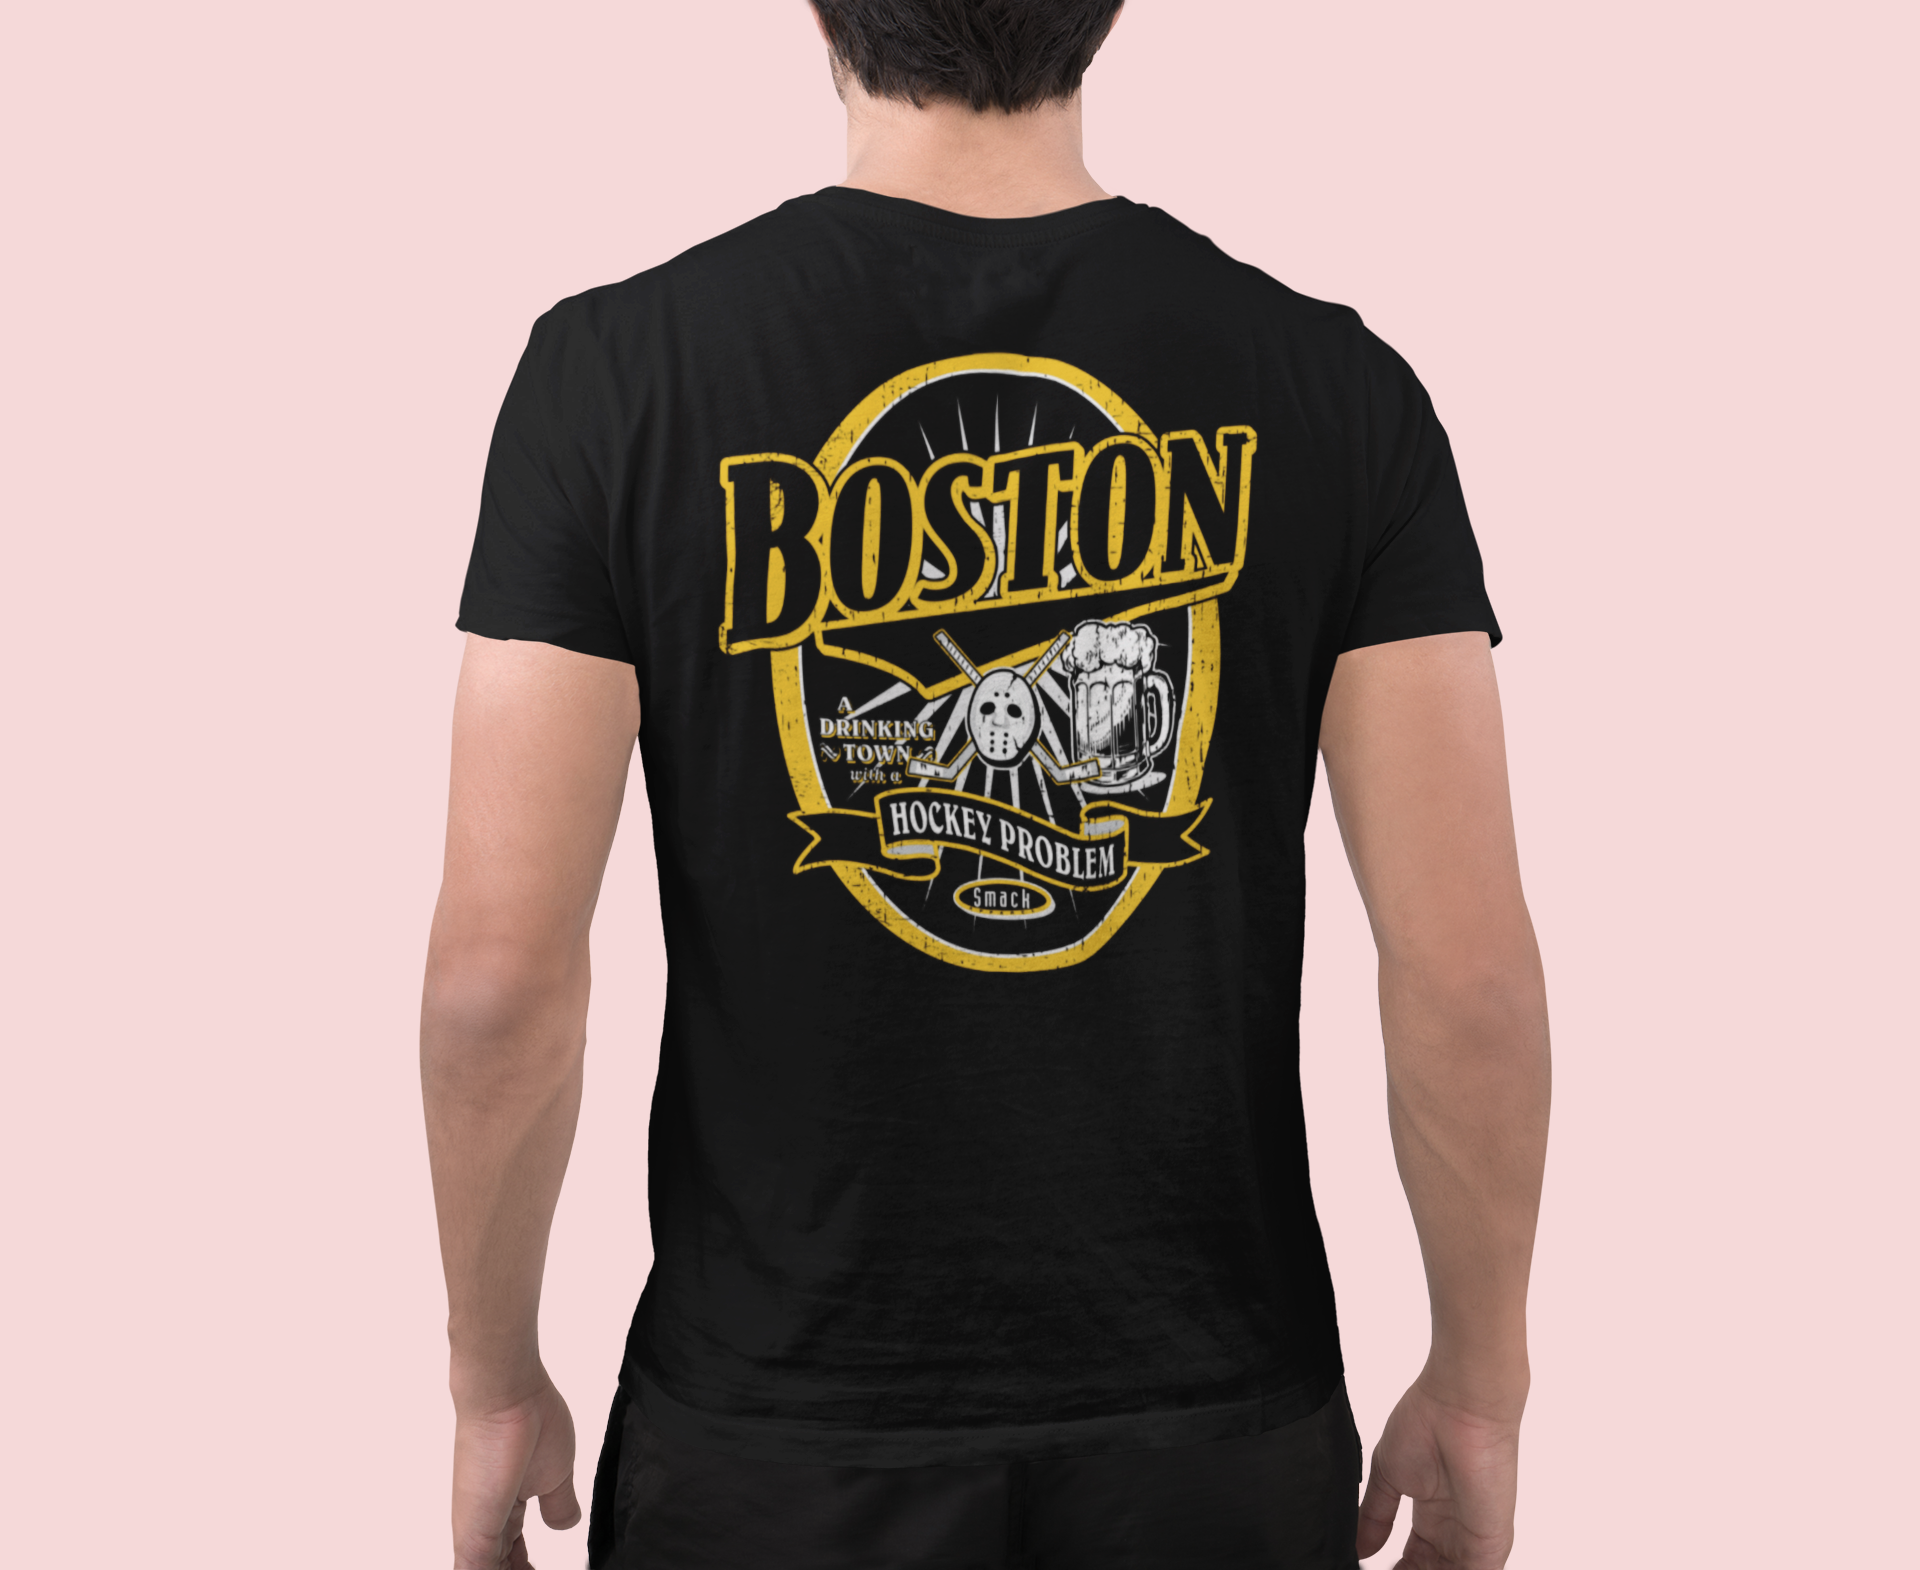 Bear Down Boston Shirt – Smack Apparel